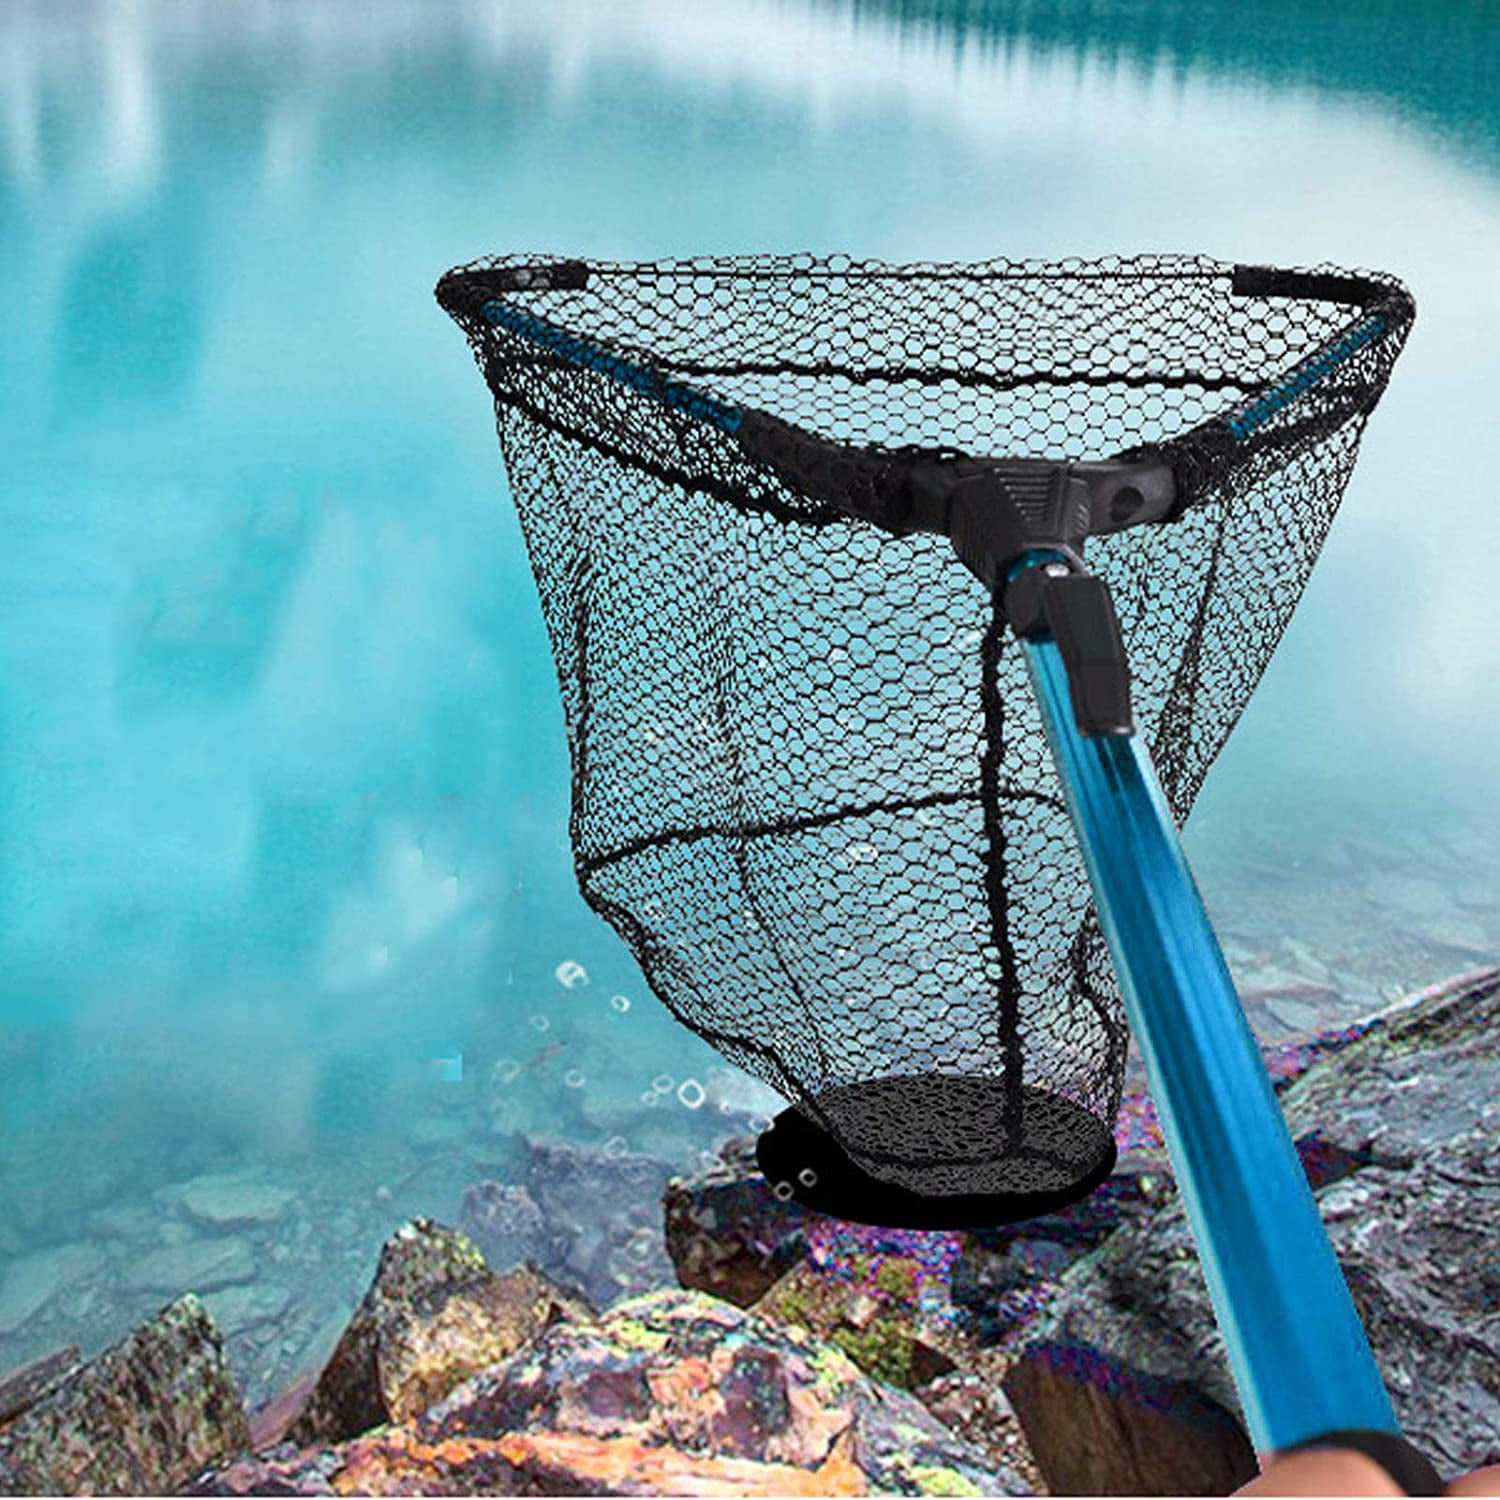 1 PC Triangular Fishing Net With Adjustable Length Telescopic Pole